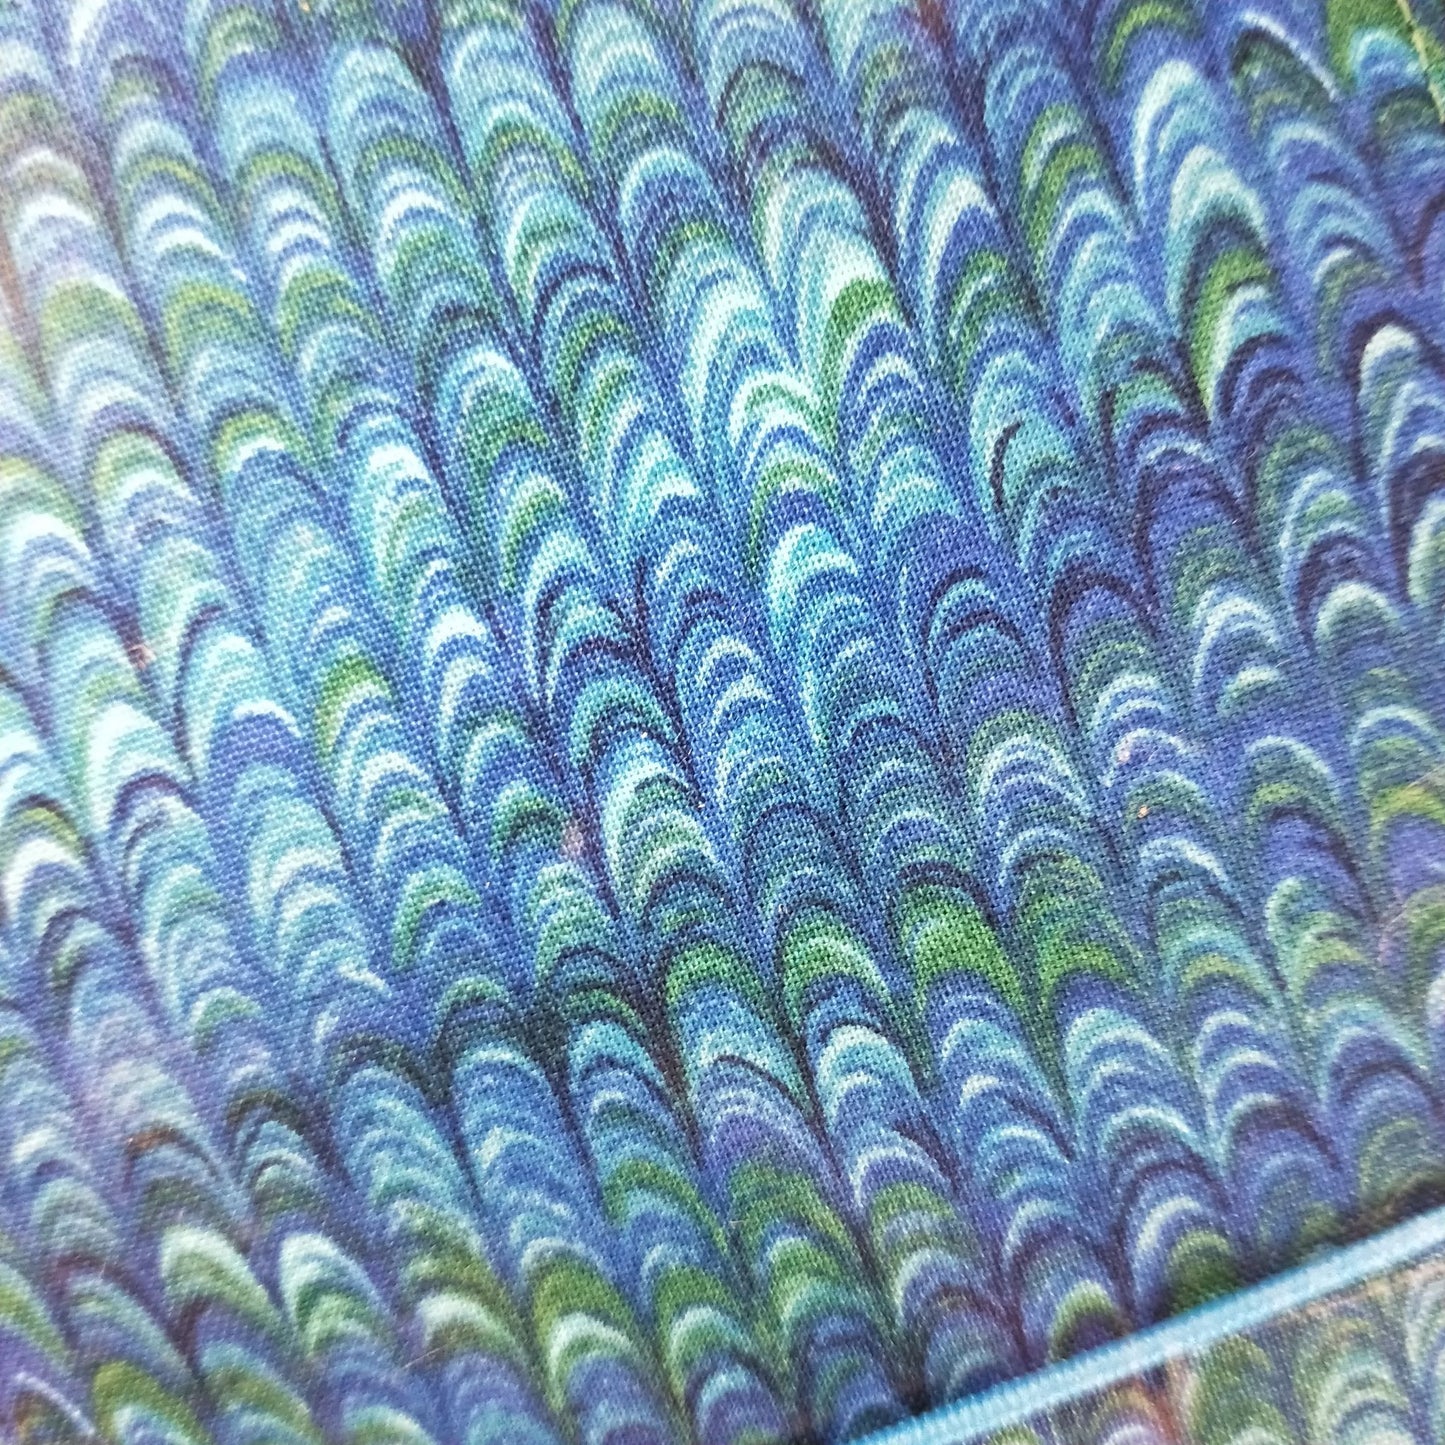 Wilddori Traveler's Notebook Cover Blue Swirls